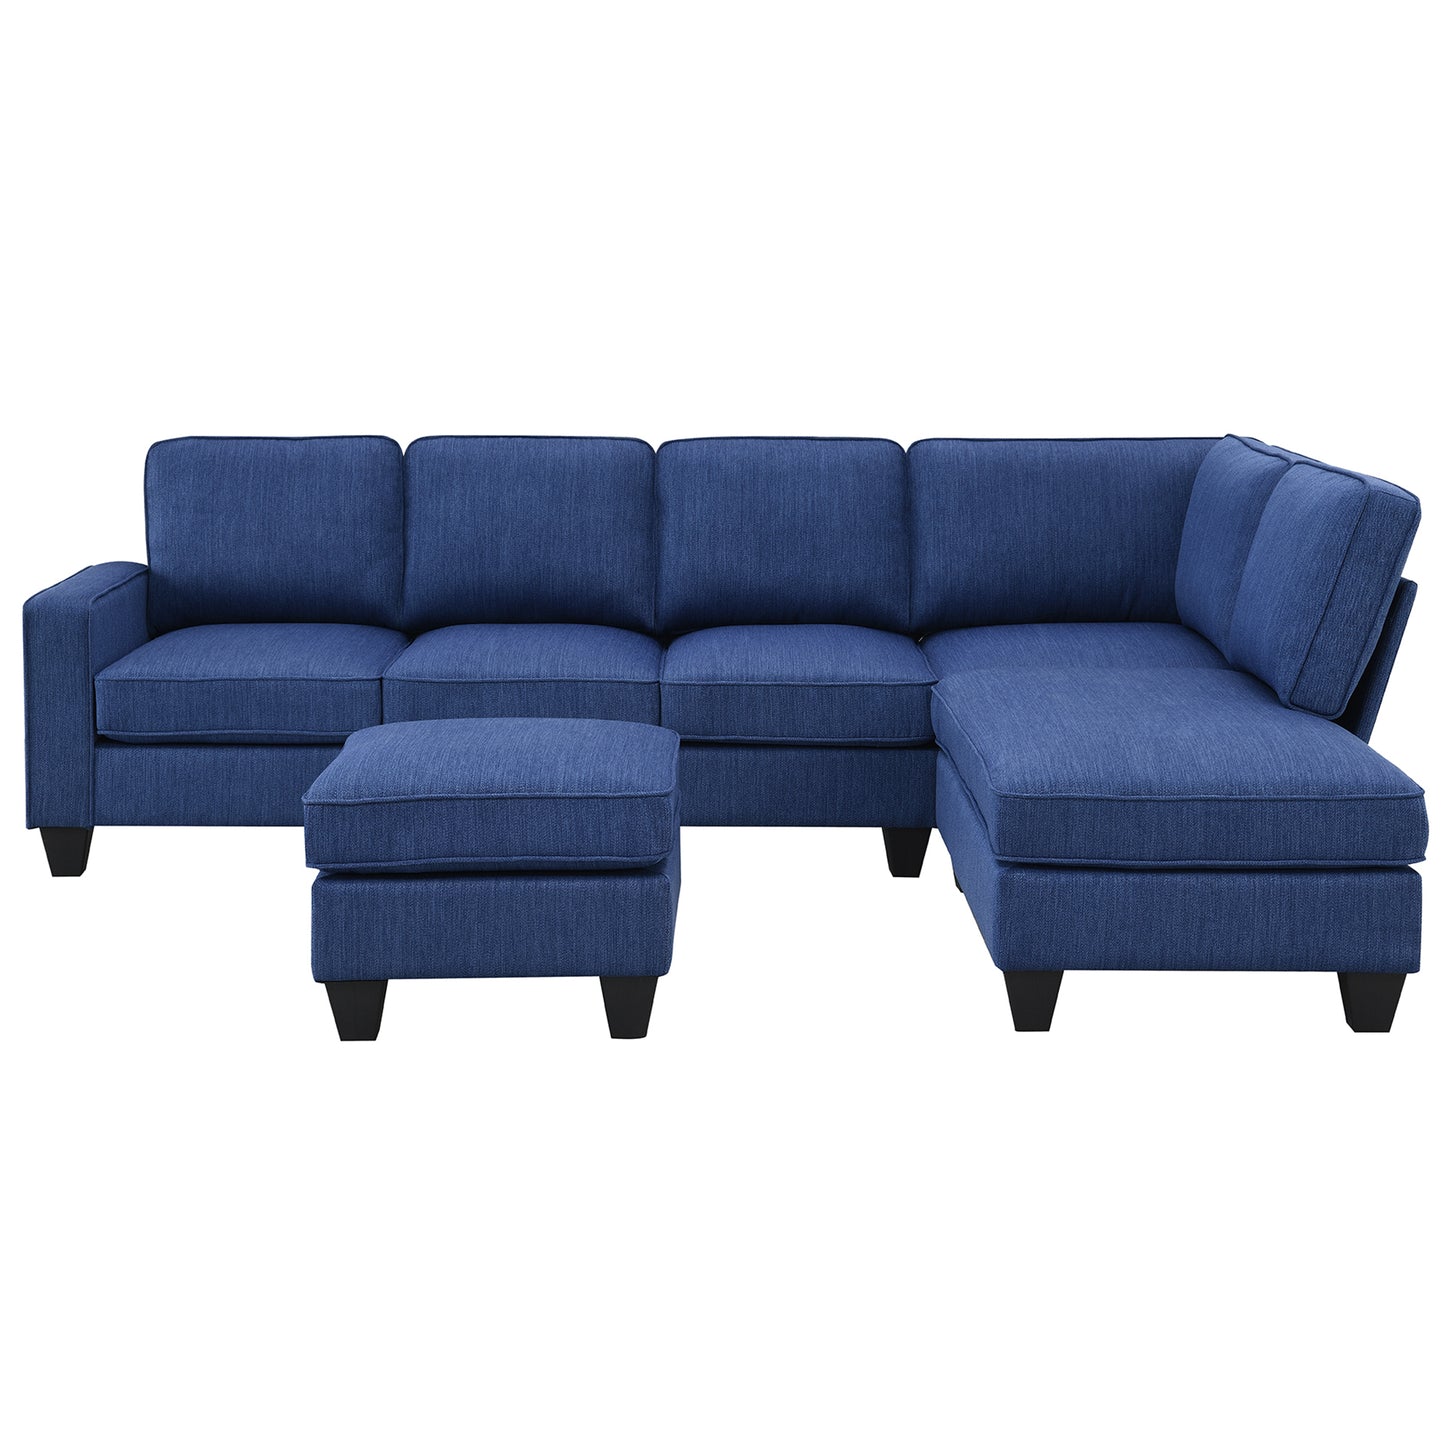 L-Shaped Sectional Sofa: 7-Seat Linen Set, Chaise, Convertible Ottoman, 3 Colors